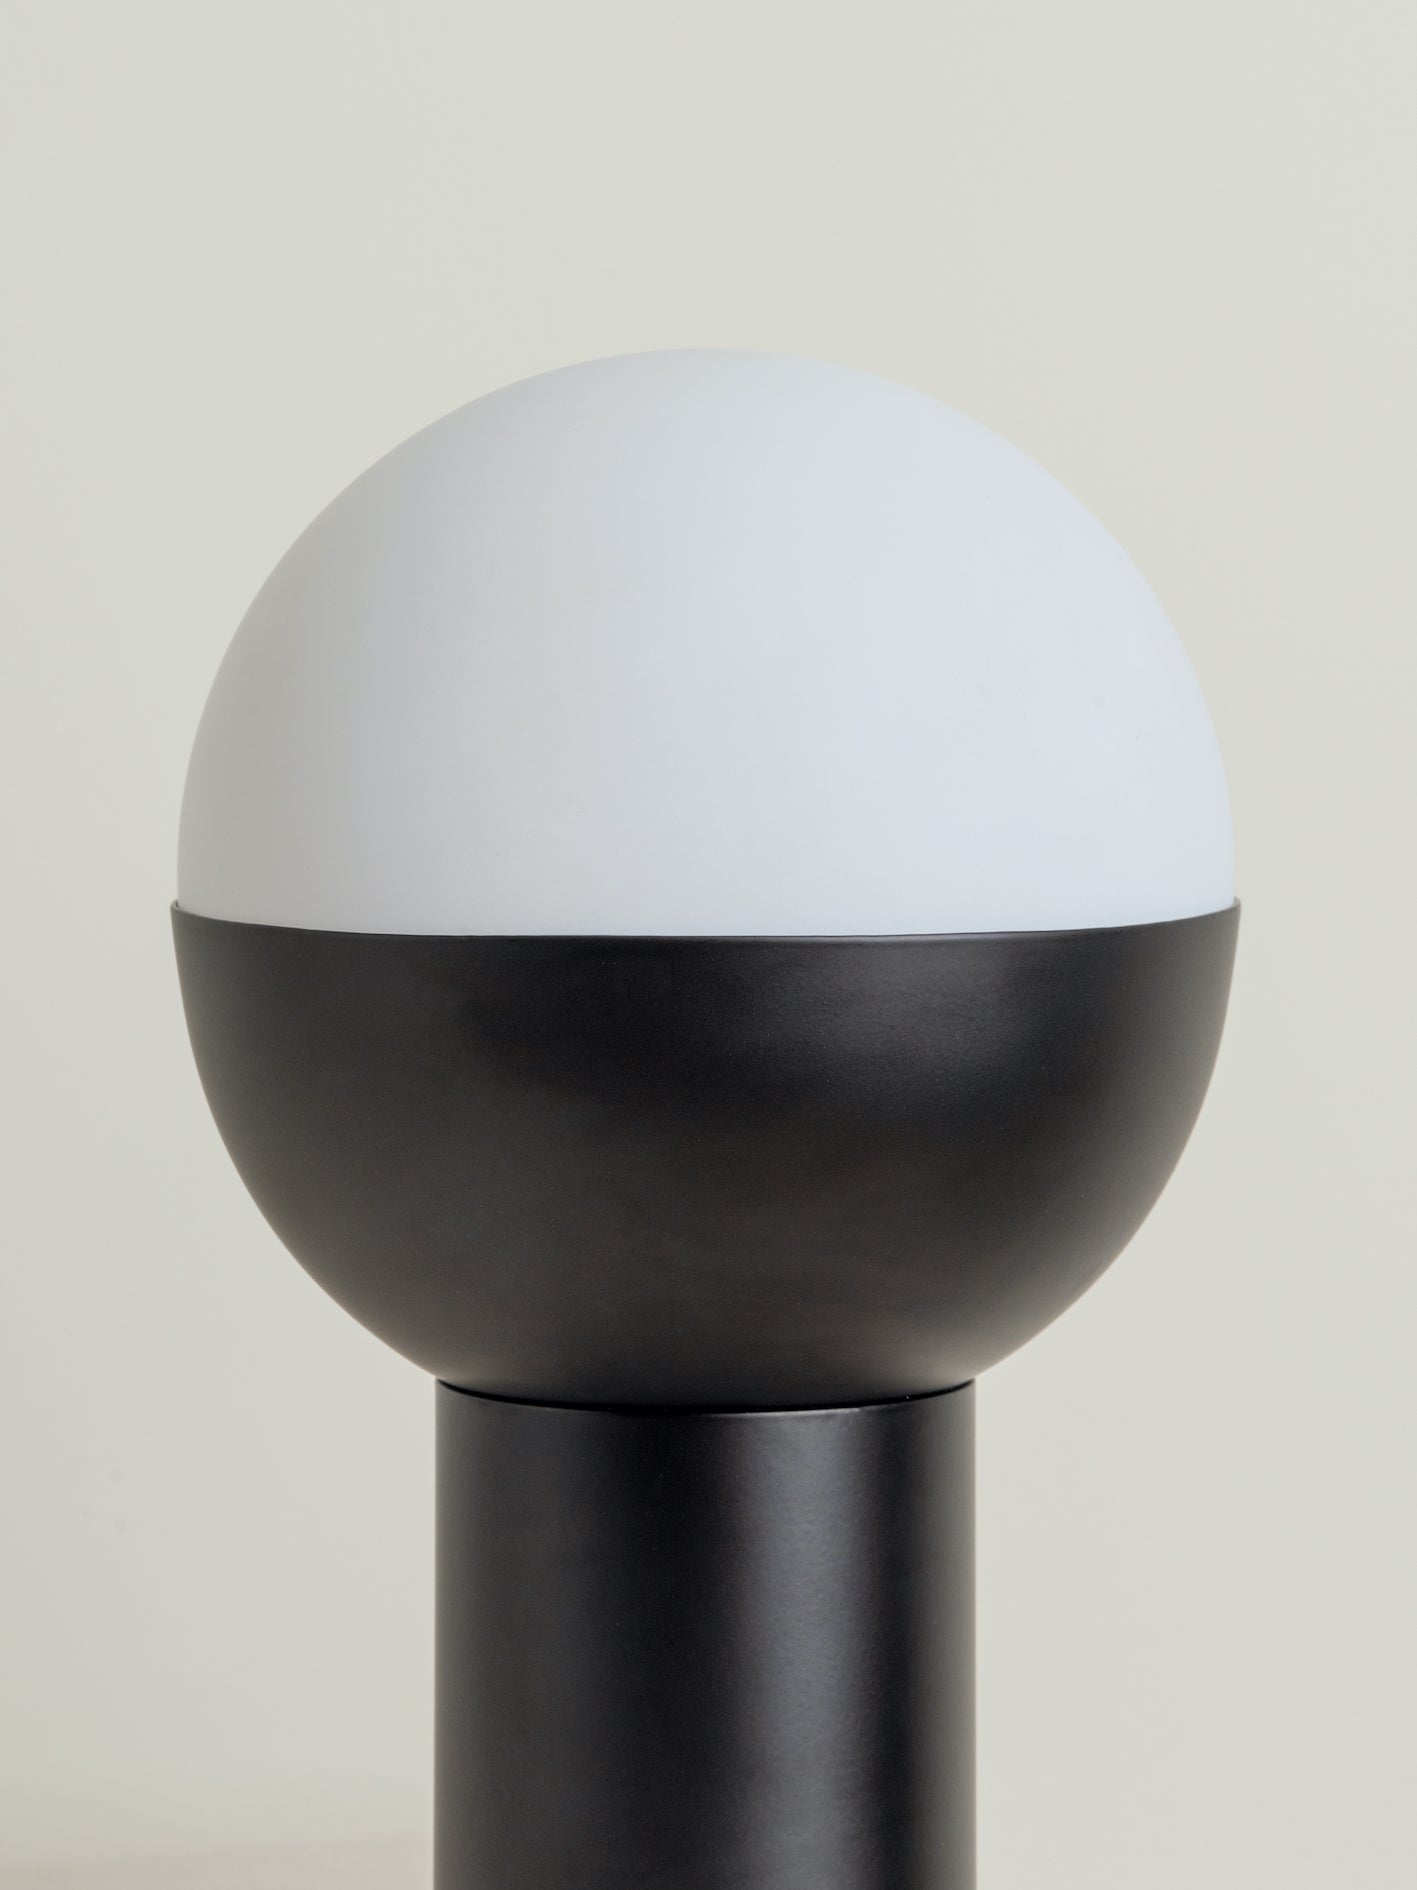 Roma - 1 light matt black and opal rechargeable table lamp | Table Lamp | Lights & Lamps | UK | Modern Affordable Designer Lighting